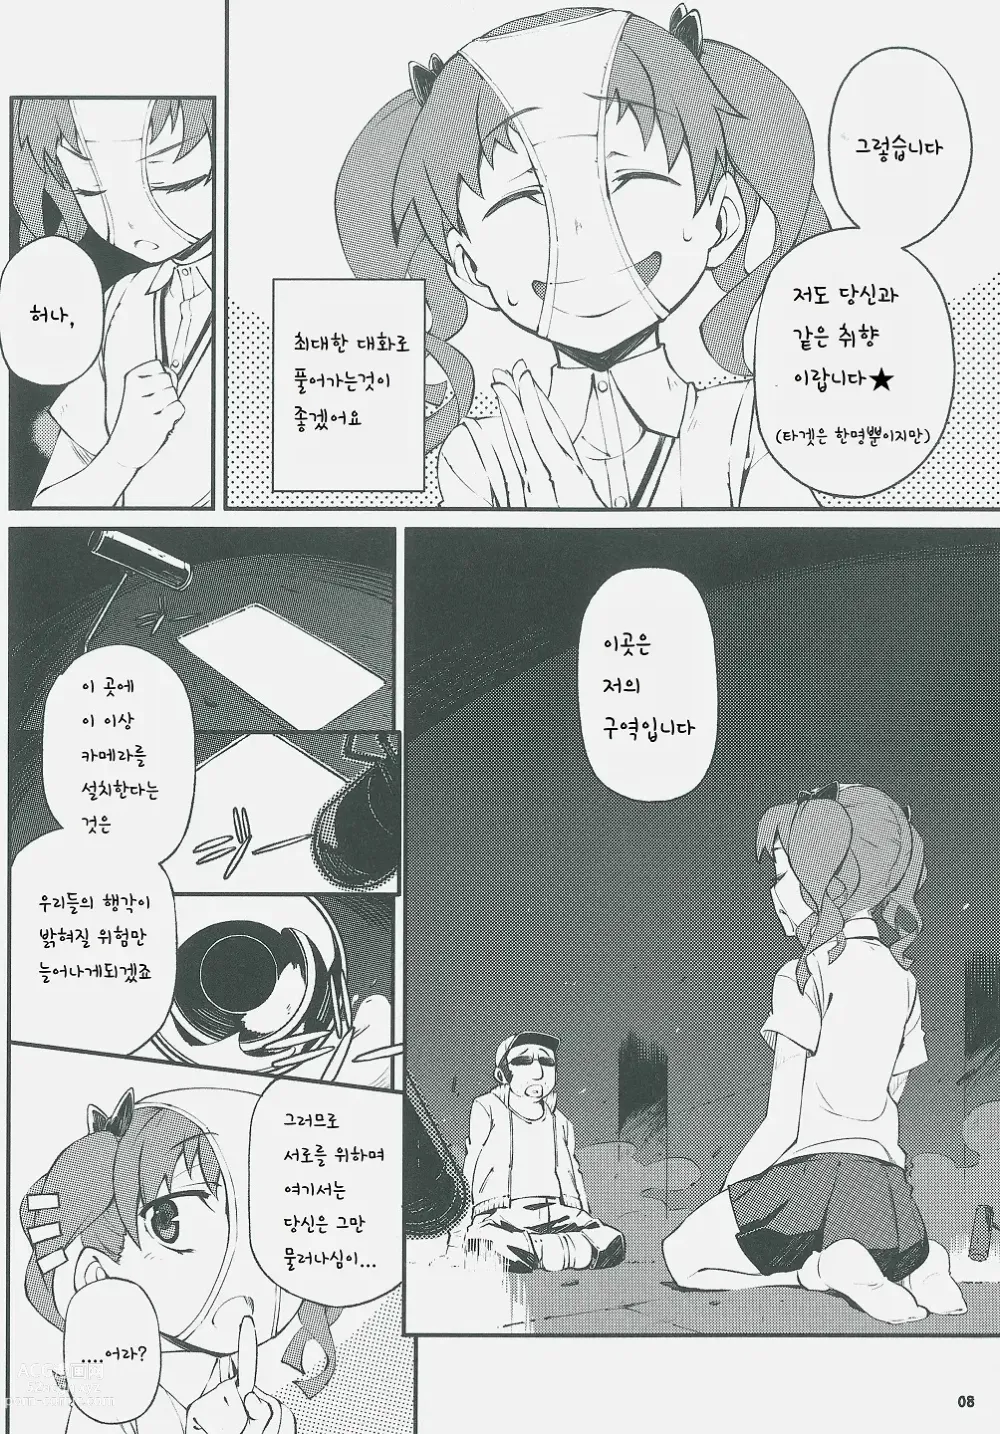 Page 7 of doujinshi 동류는 동료를 부른다.